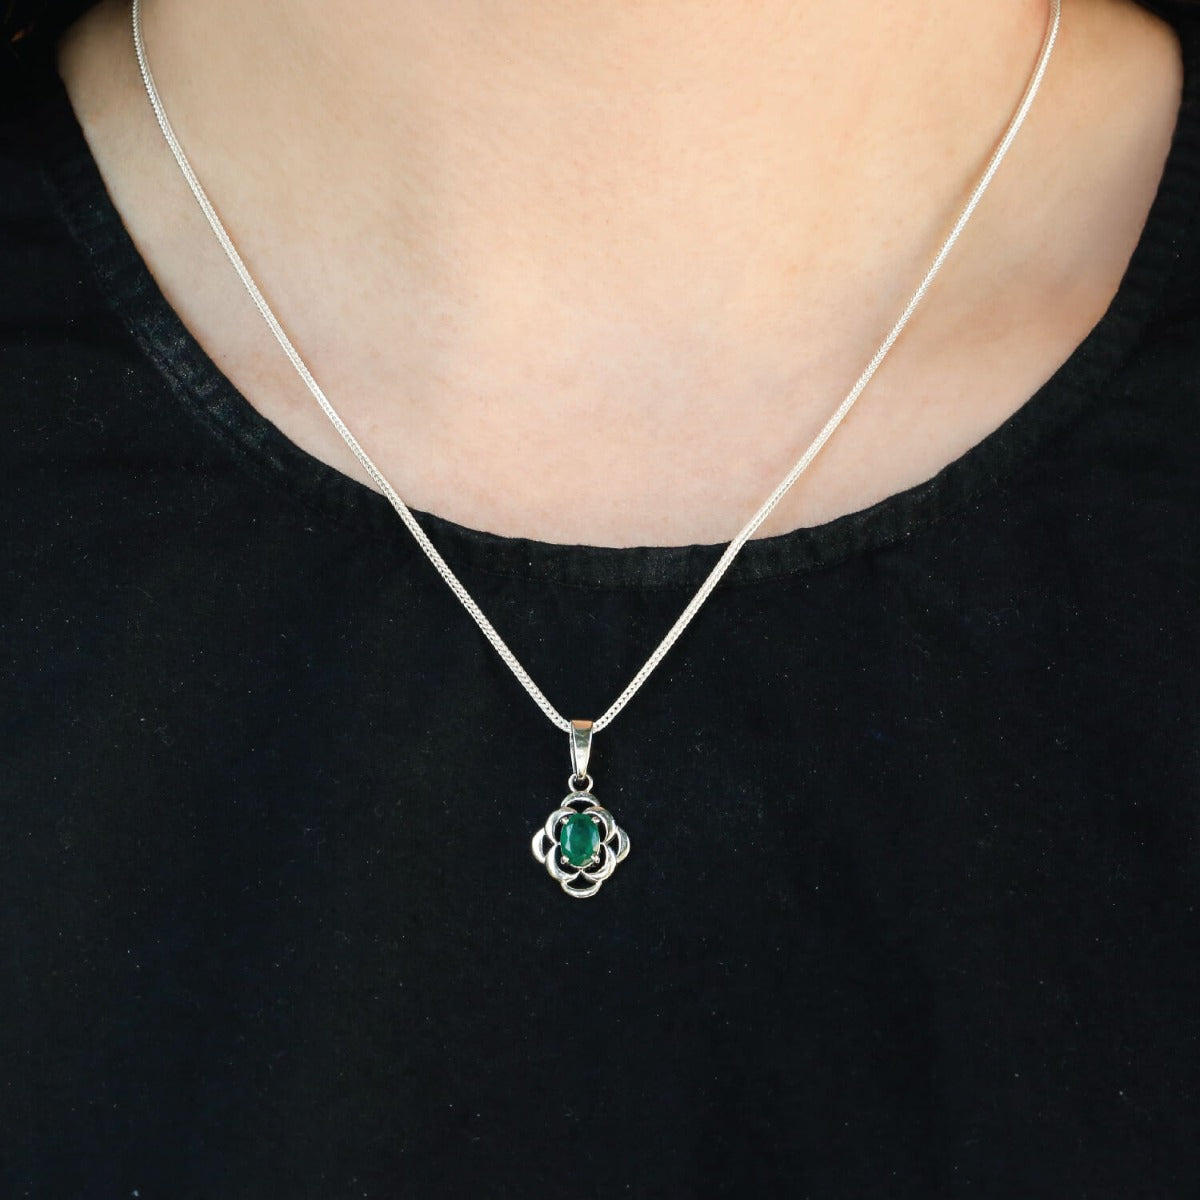 Emerald pendant, silver emerald pendant, emerald silver pendant, green pendant, green silver pendant, silver green pendant, silver pendant, sterling silver pendant, 